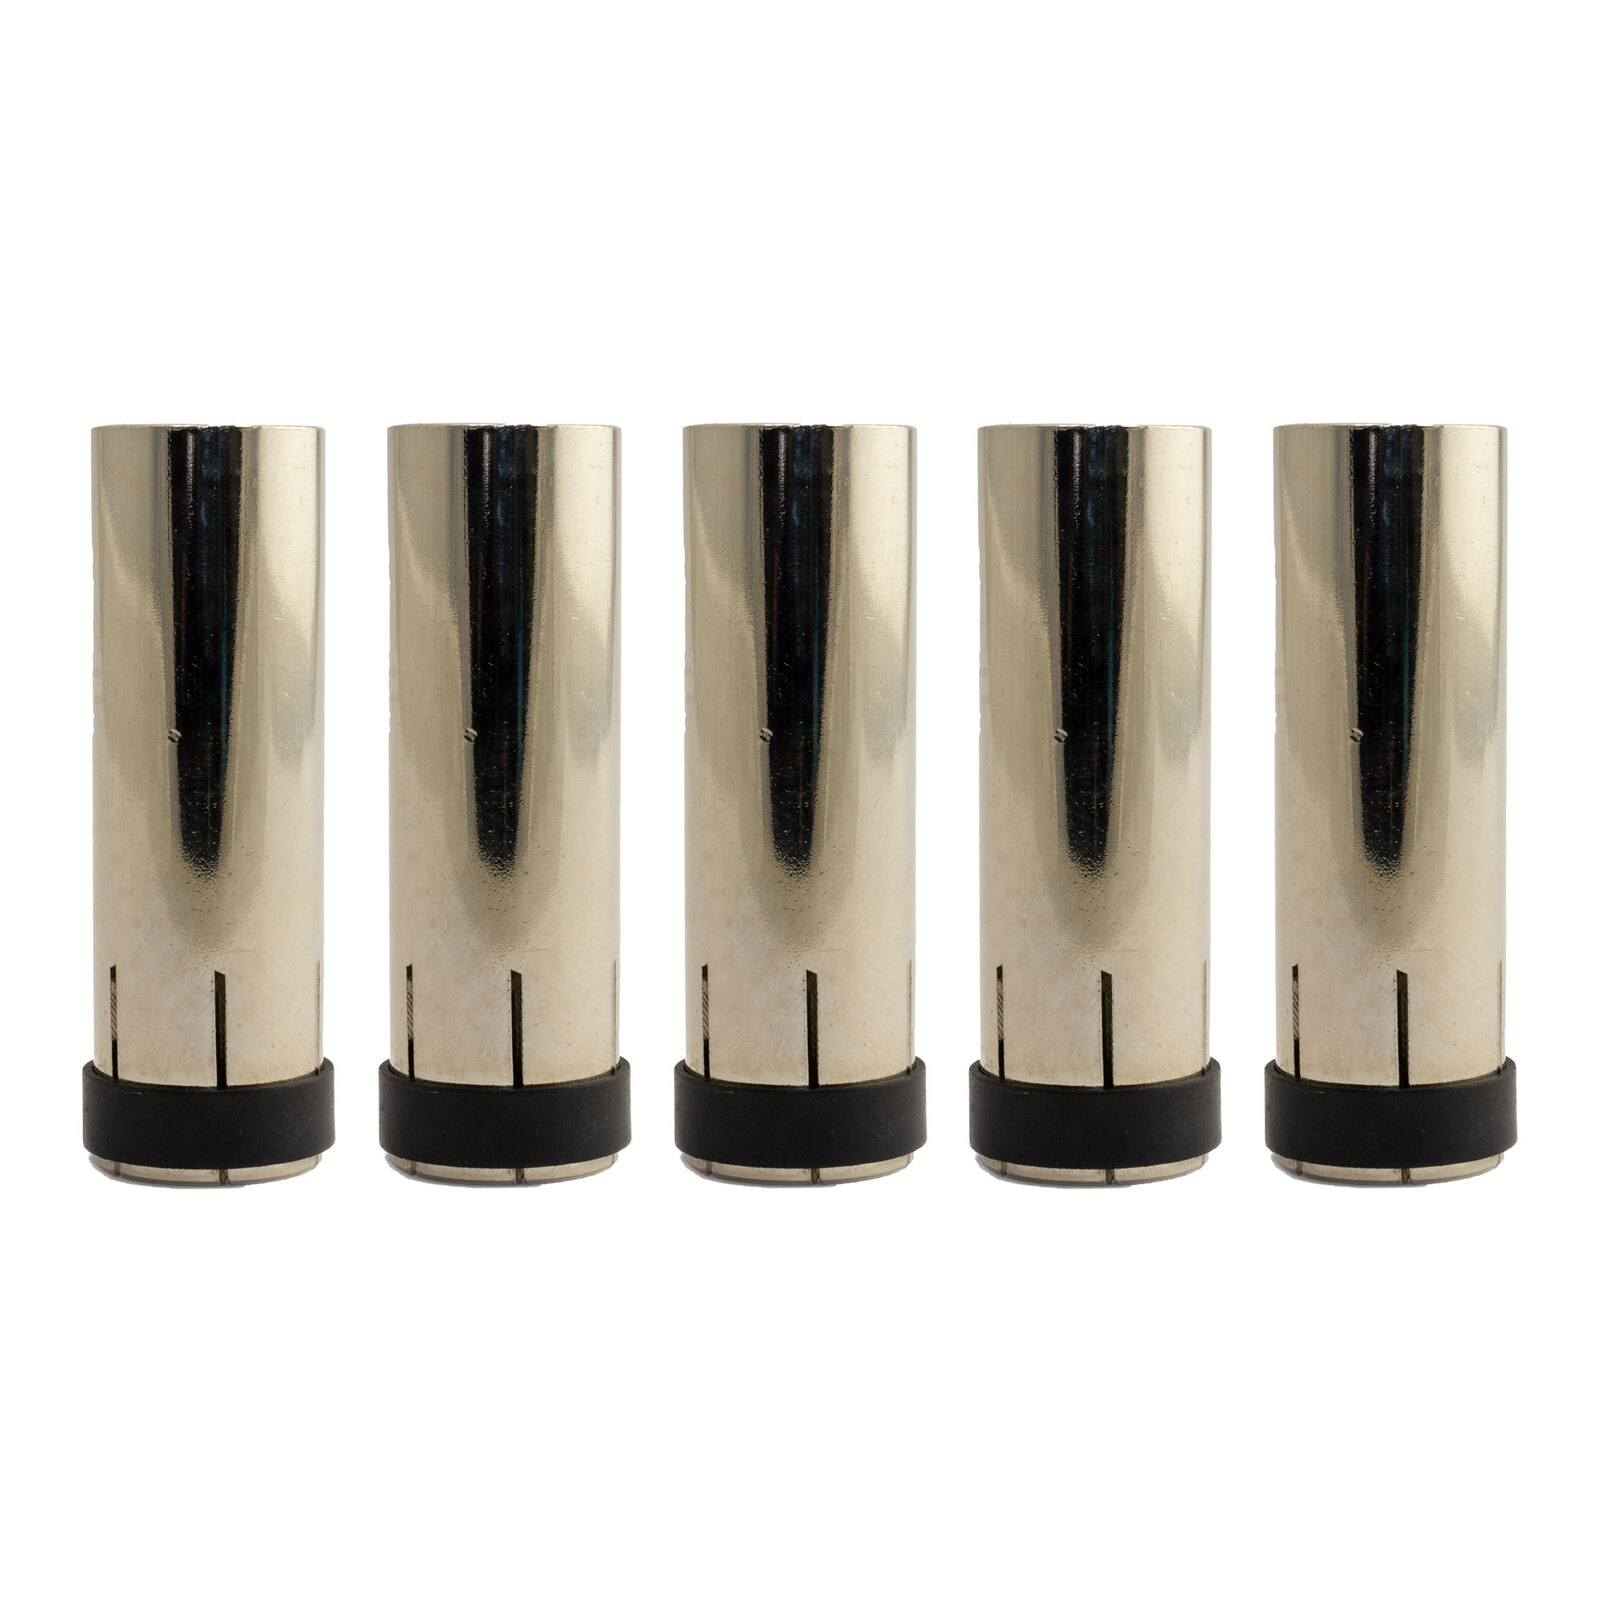 5 x MIG Nozzle / Shroud MB26 / 38 / 501 Cylindrical - Binzel Style